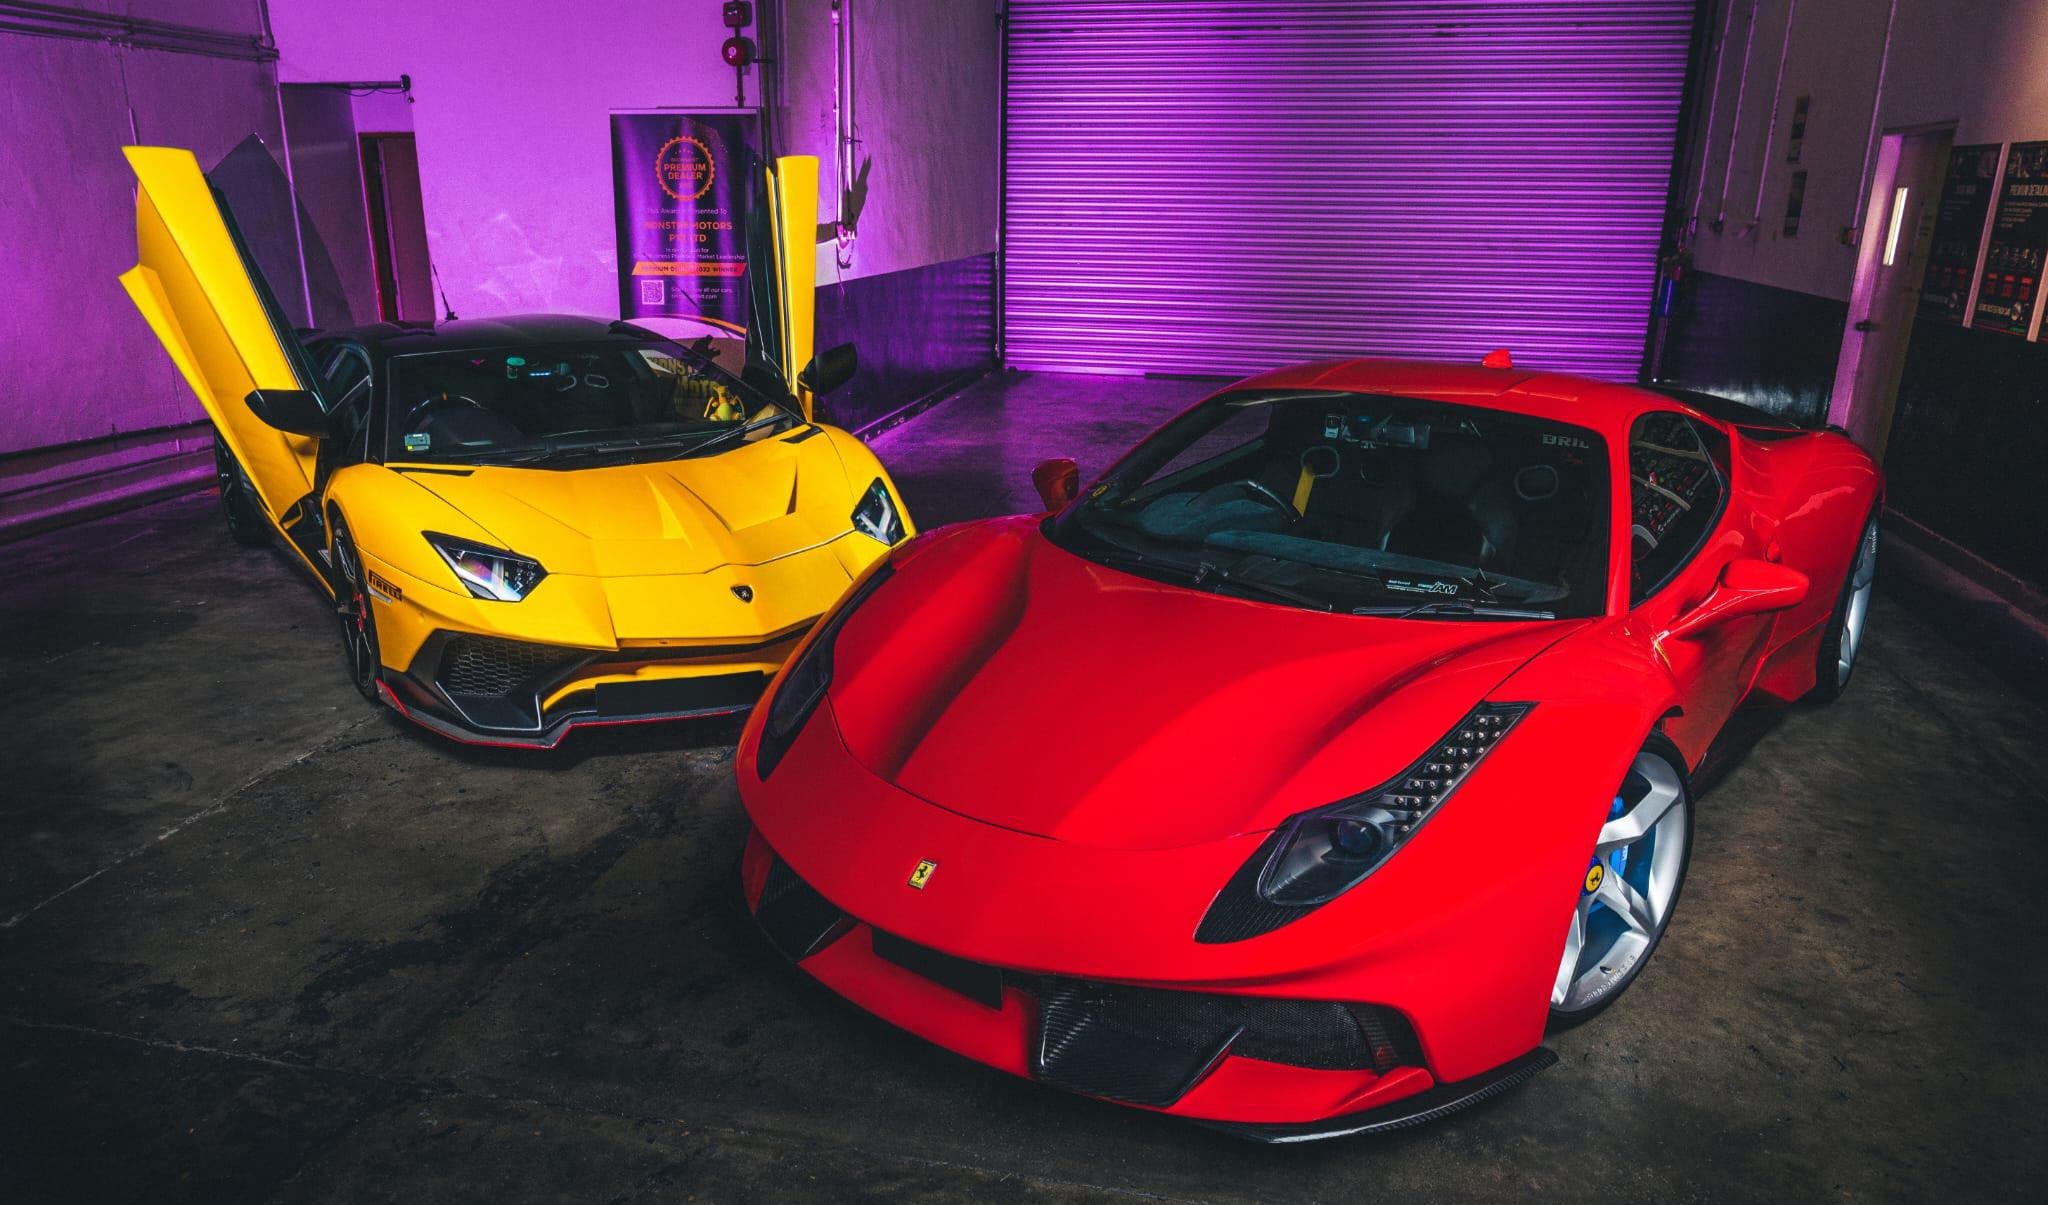 Lamborghini or Ferrari?